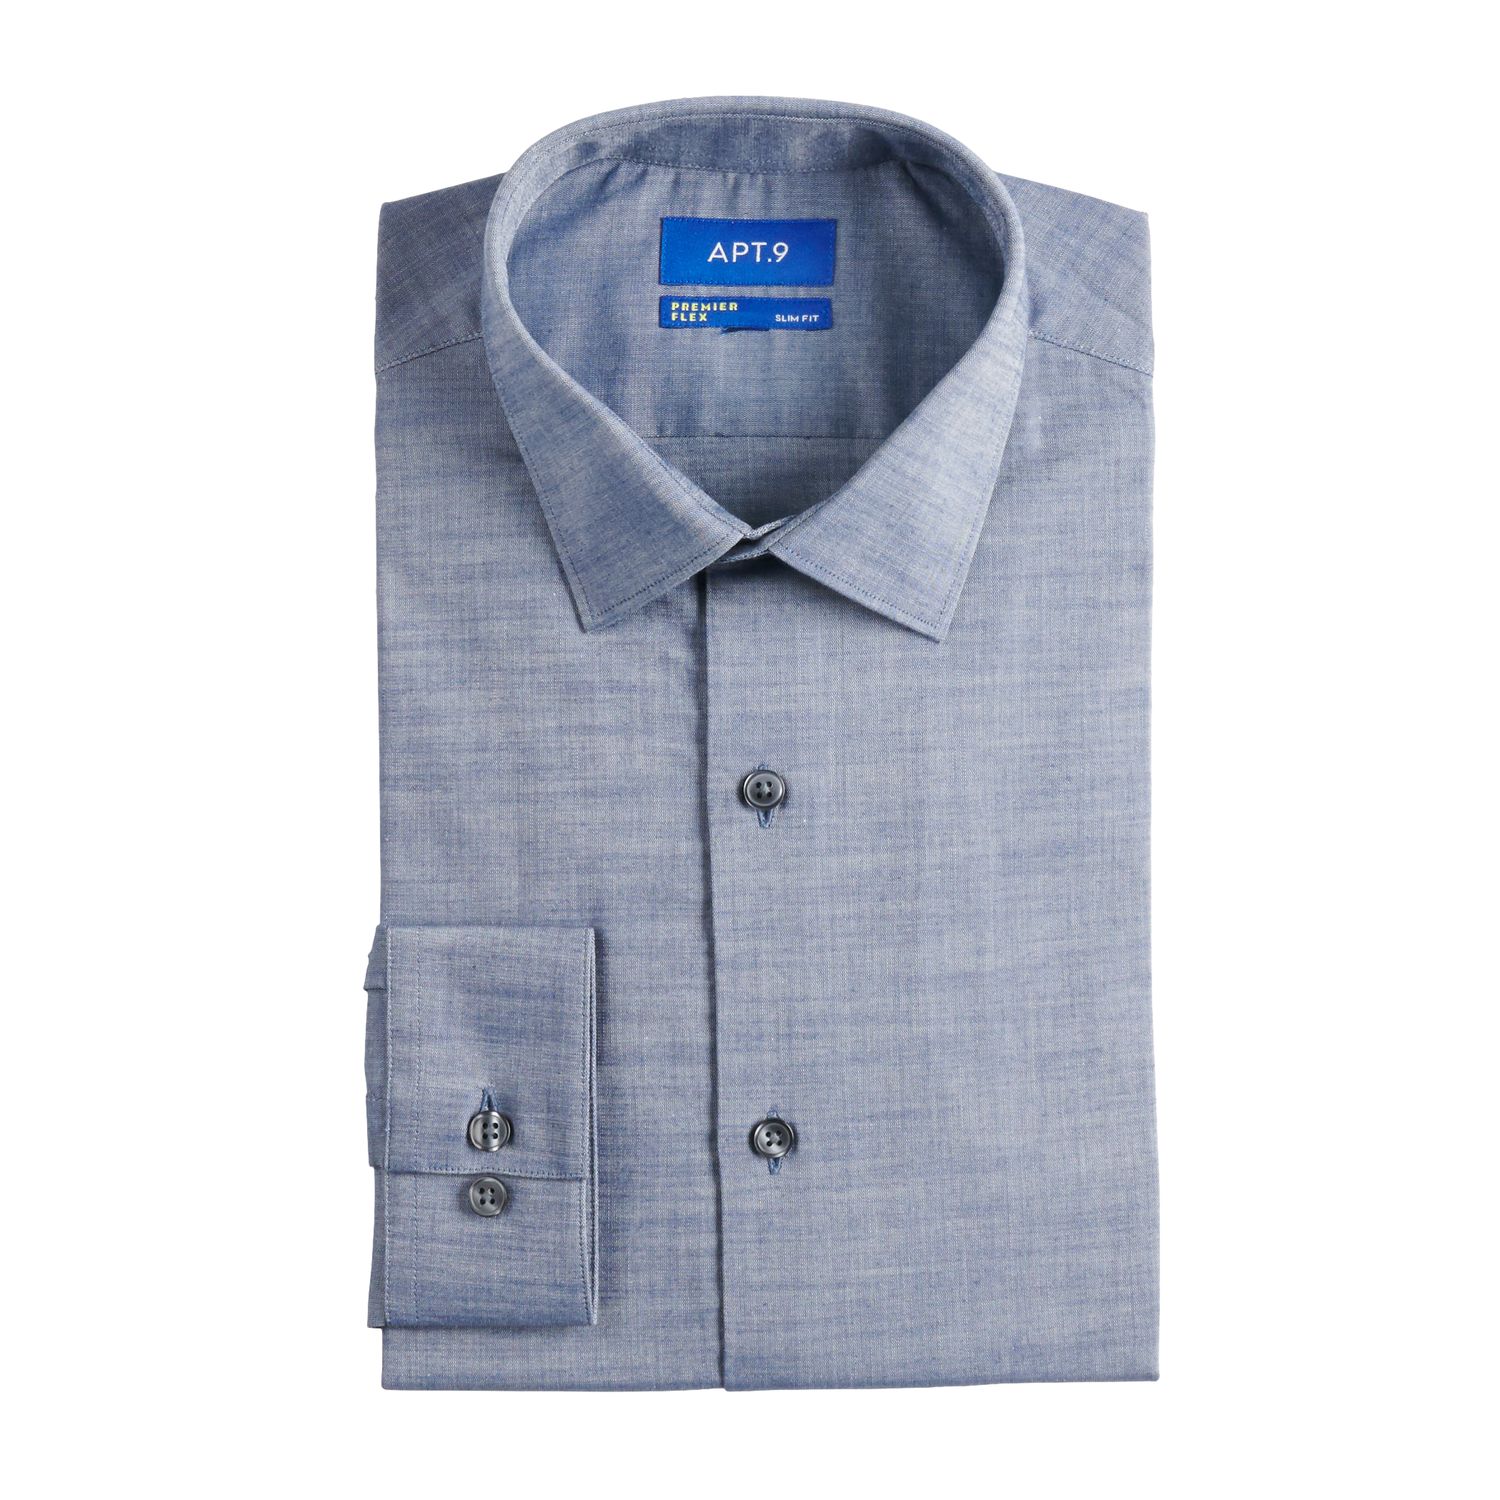 Wrinkle Resistant Spread-Collar Dress Shirt